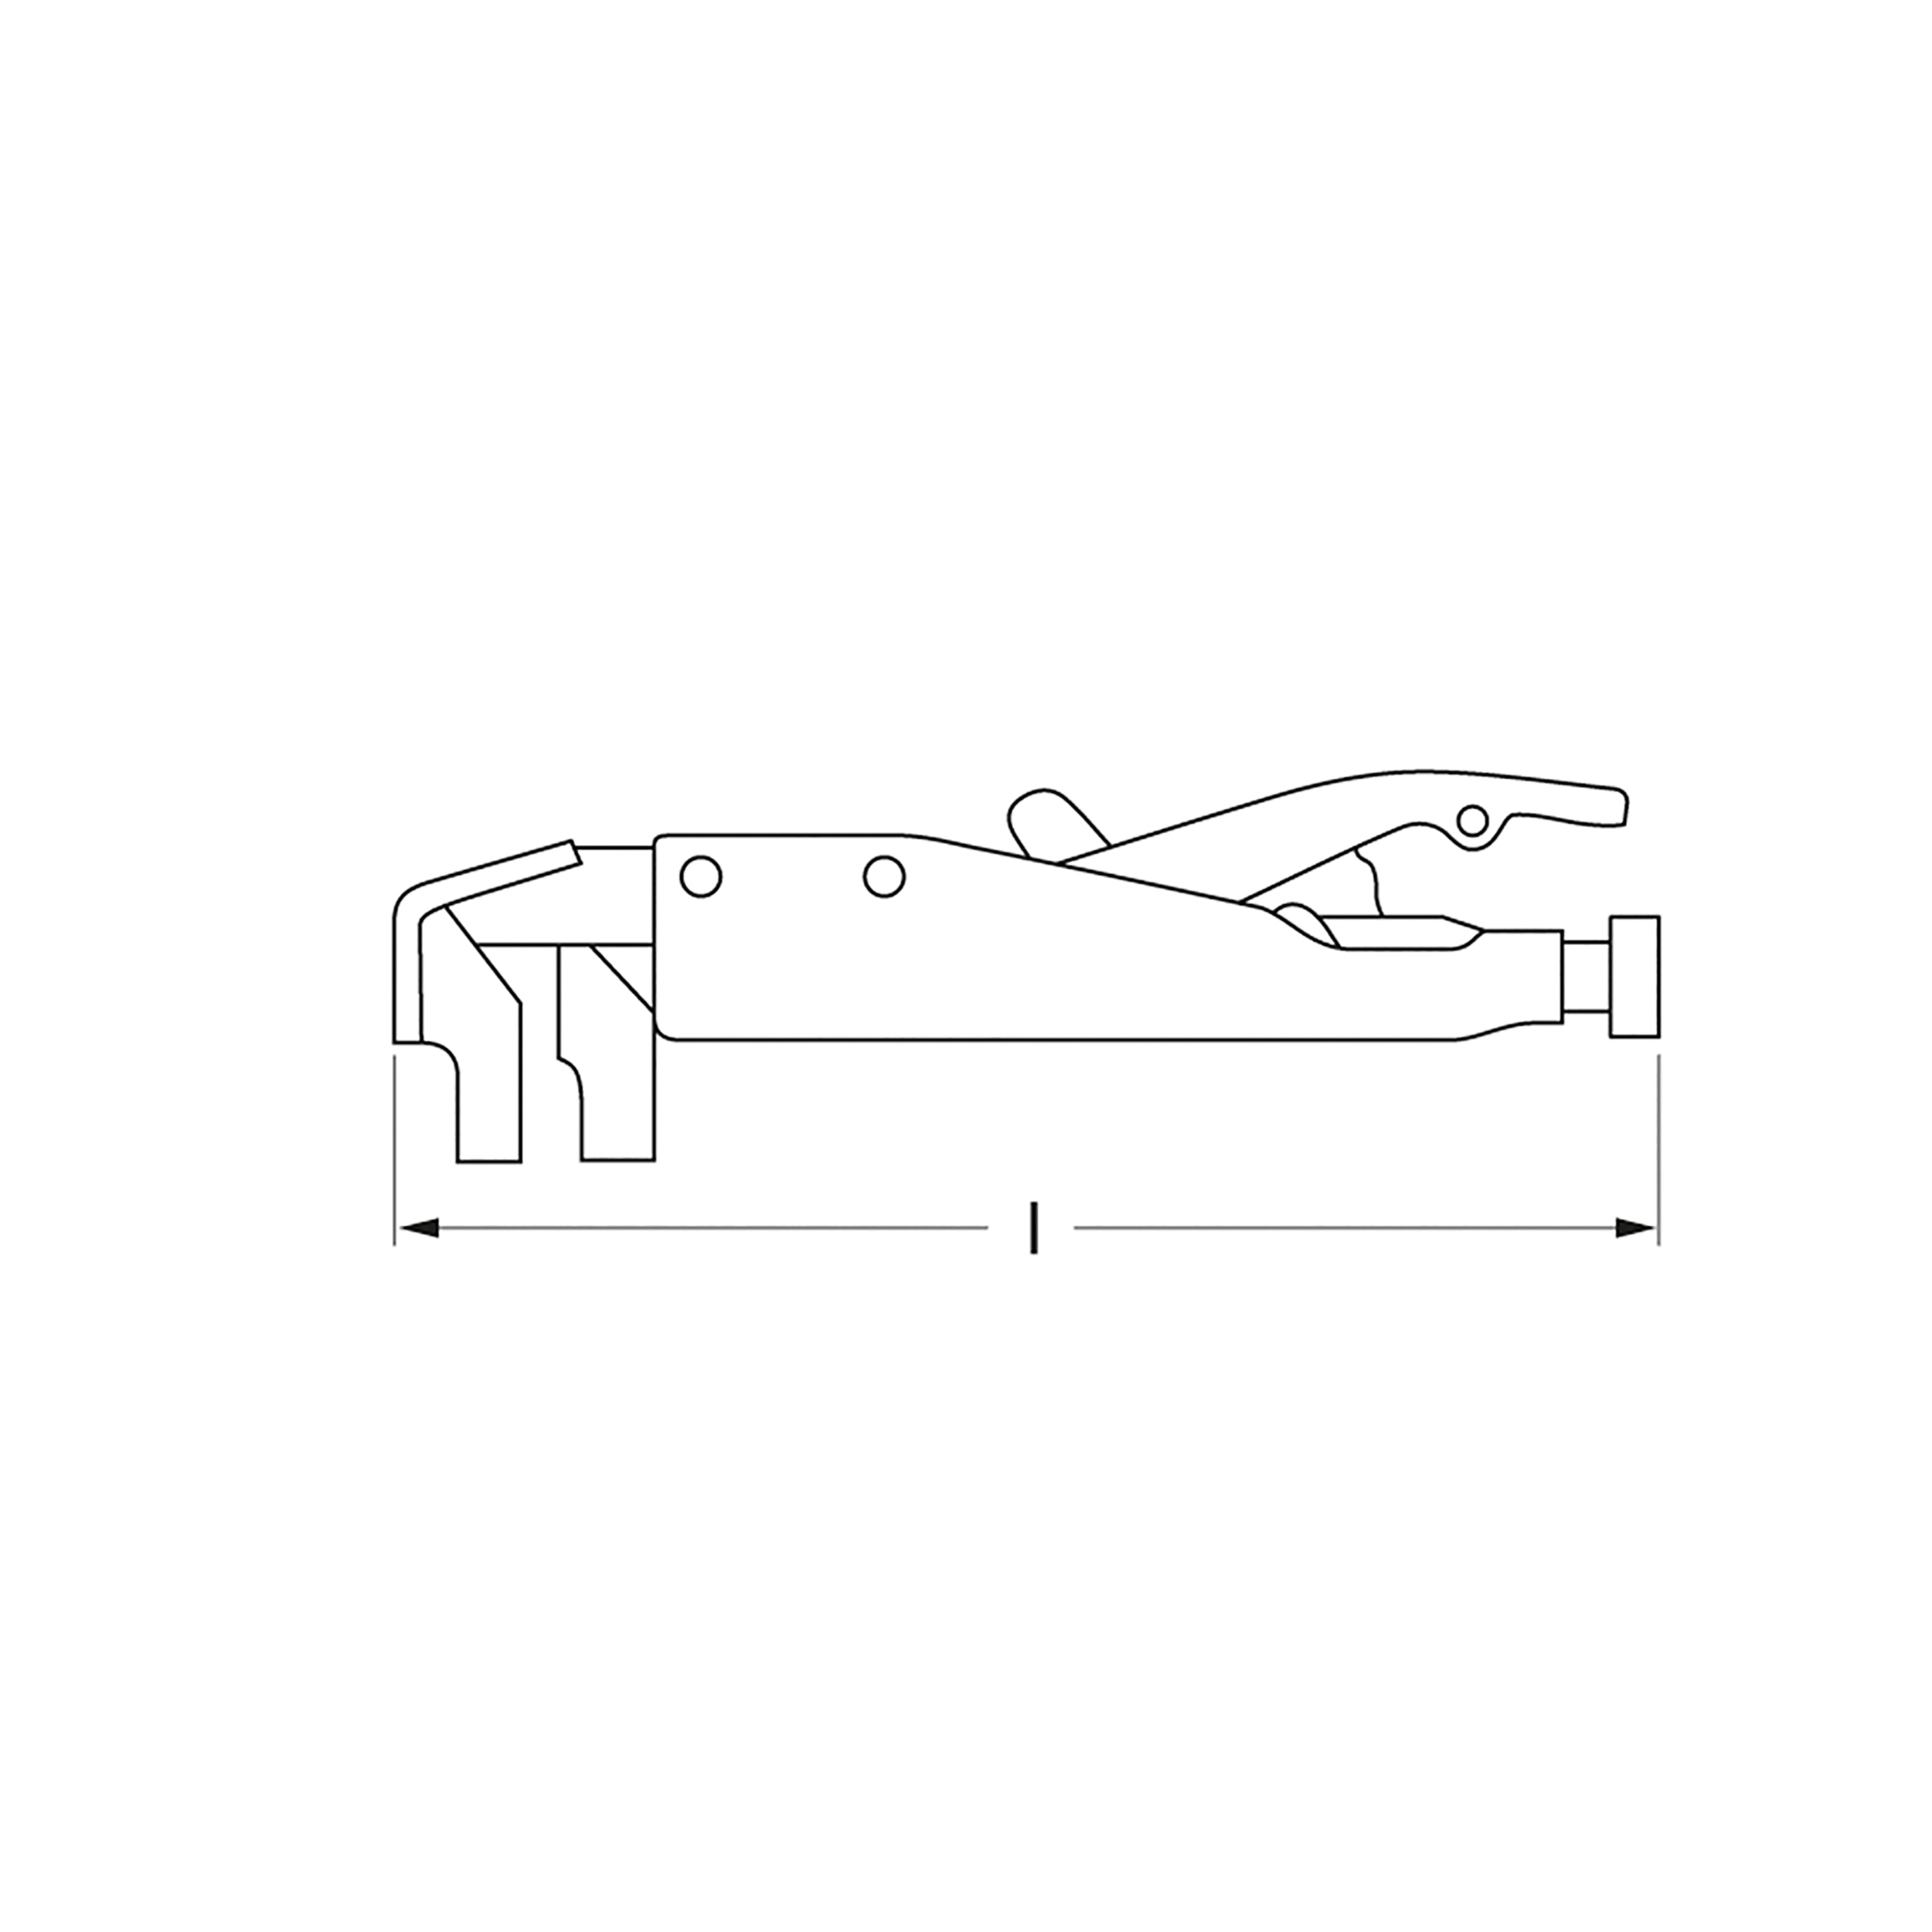 Axial-Gripzange, Typ T, 194 mm, MATADOR Art.-Nr.: 05870006